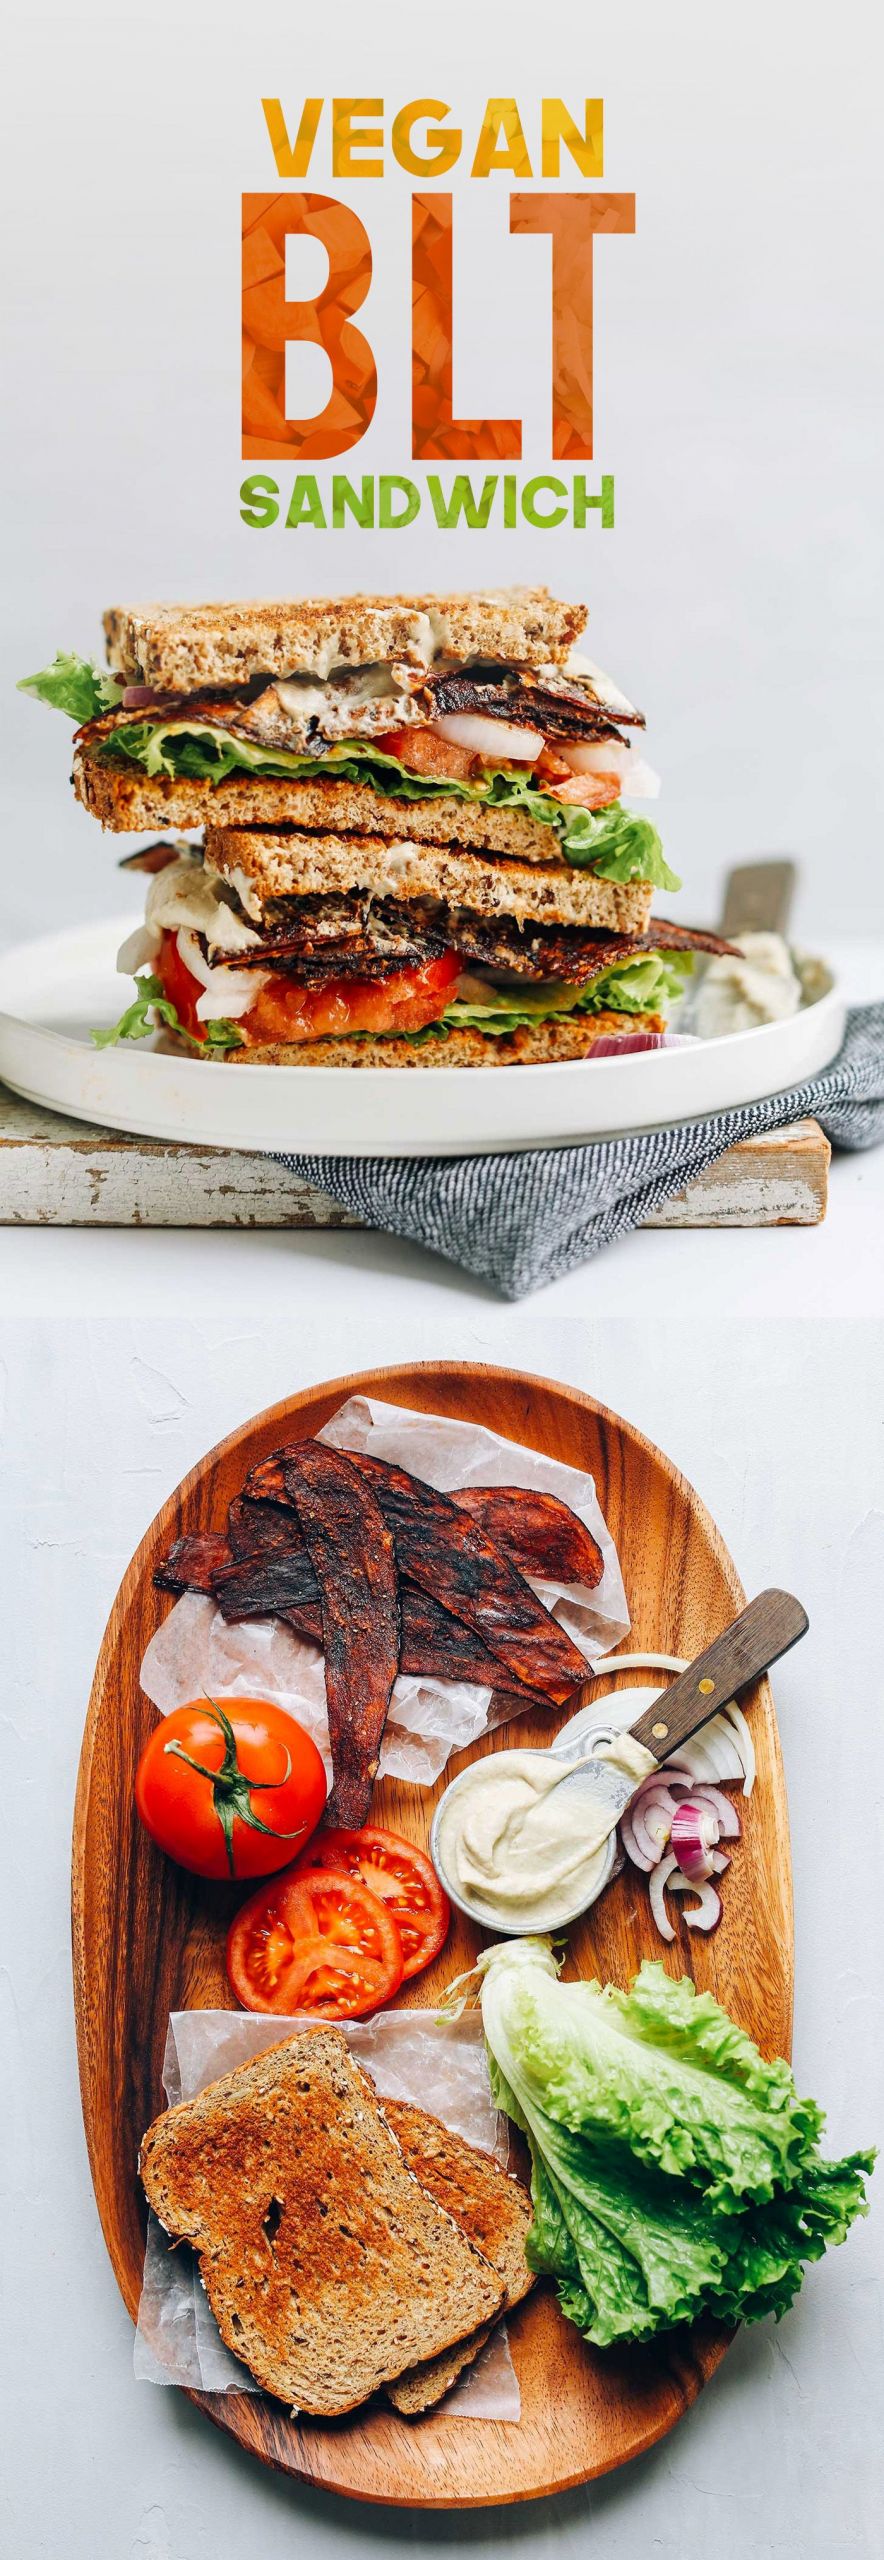 Healthy Vegetarian Sandwich Recipes
 Vegan "BLT" Sandwich Recipe Vegan t